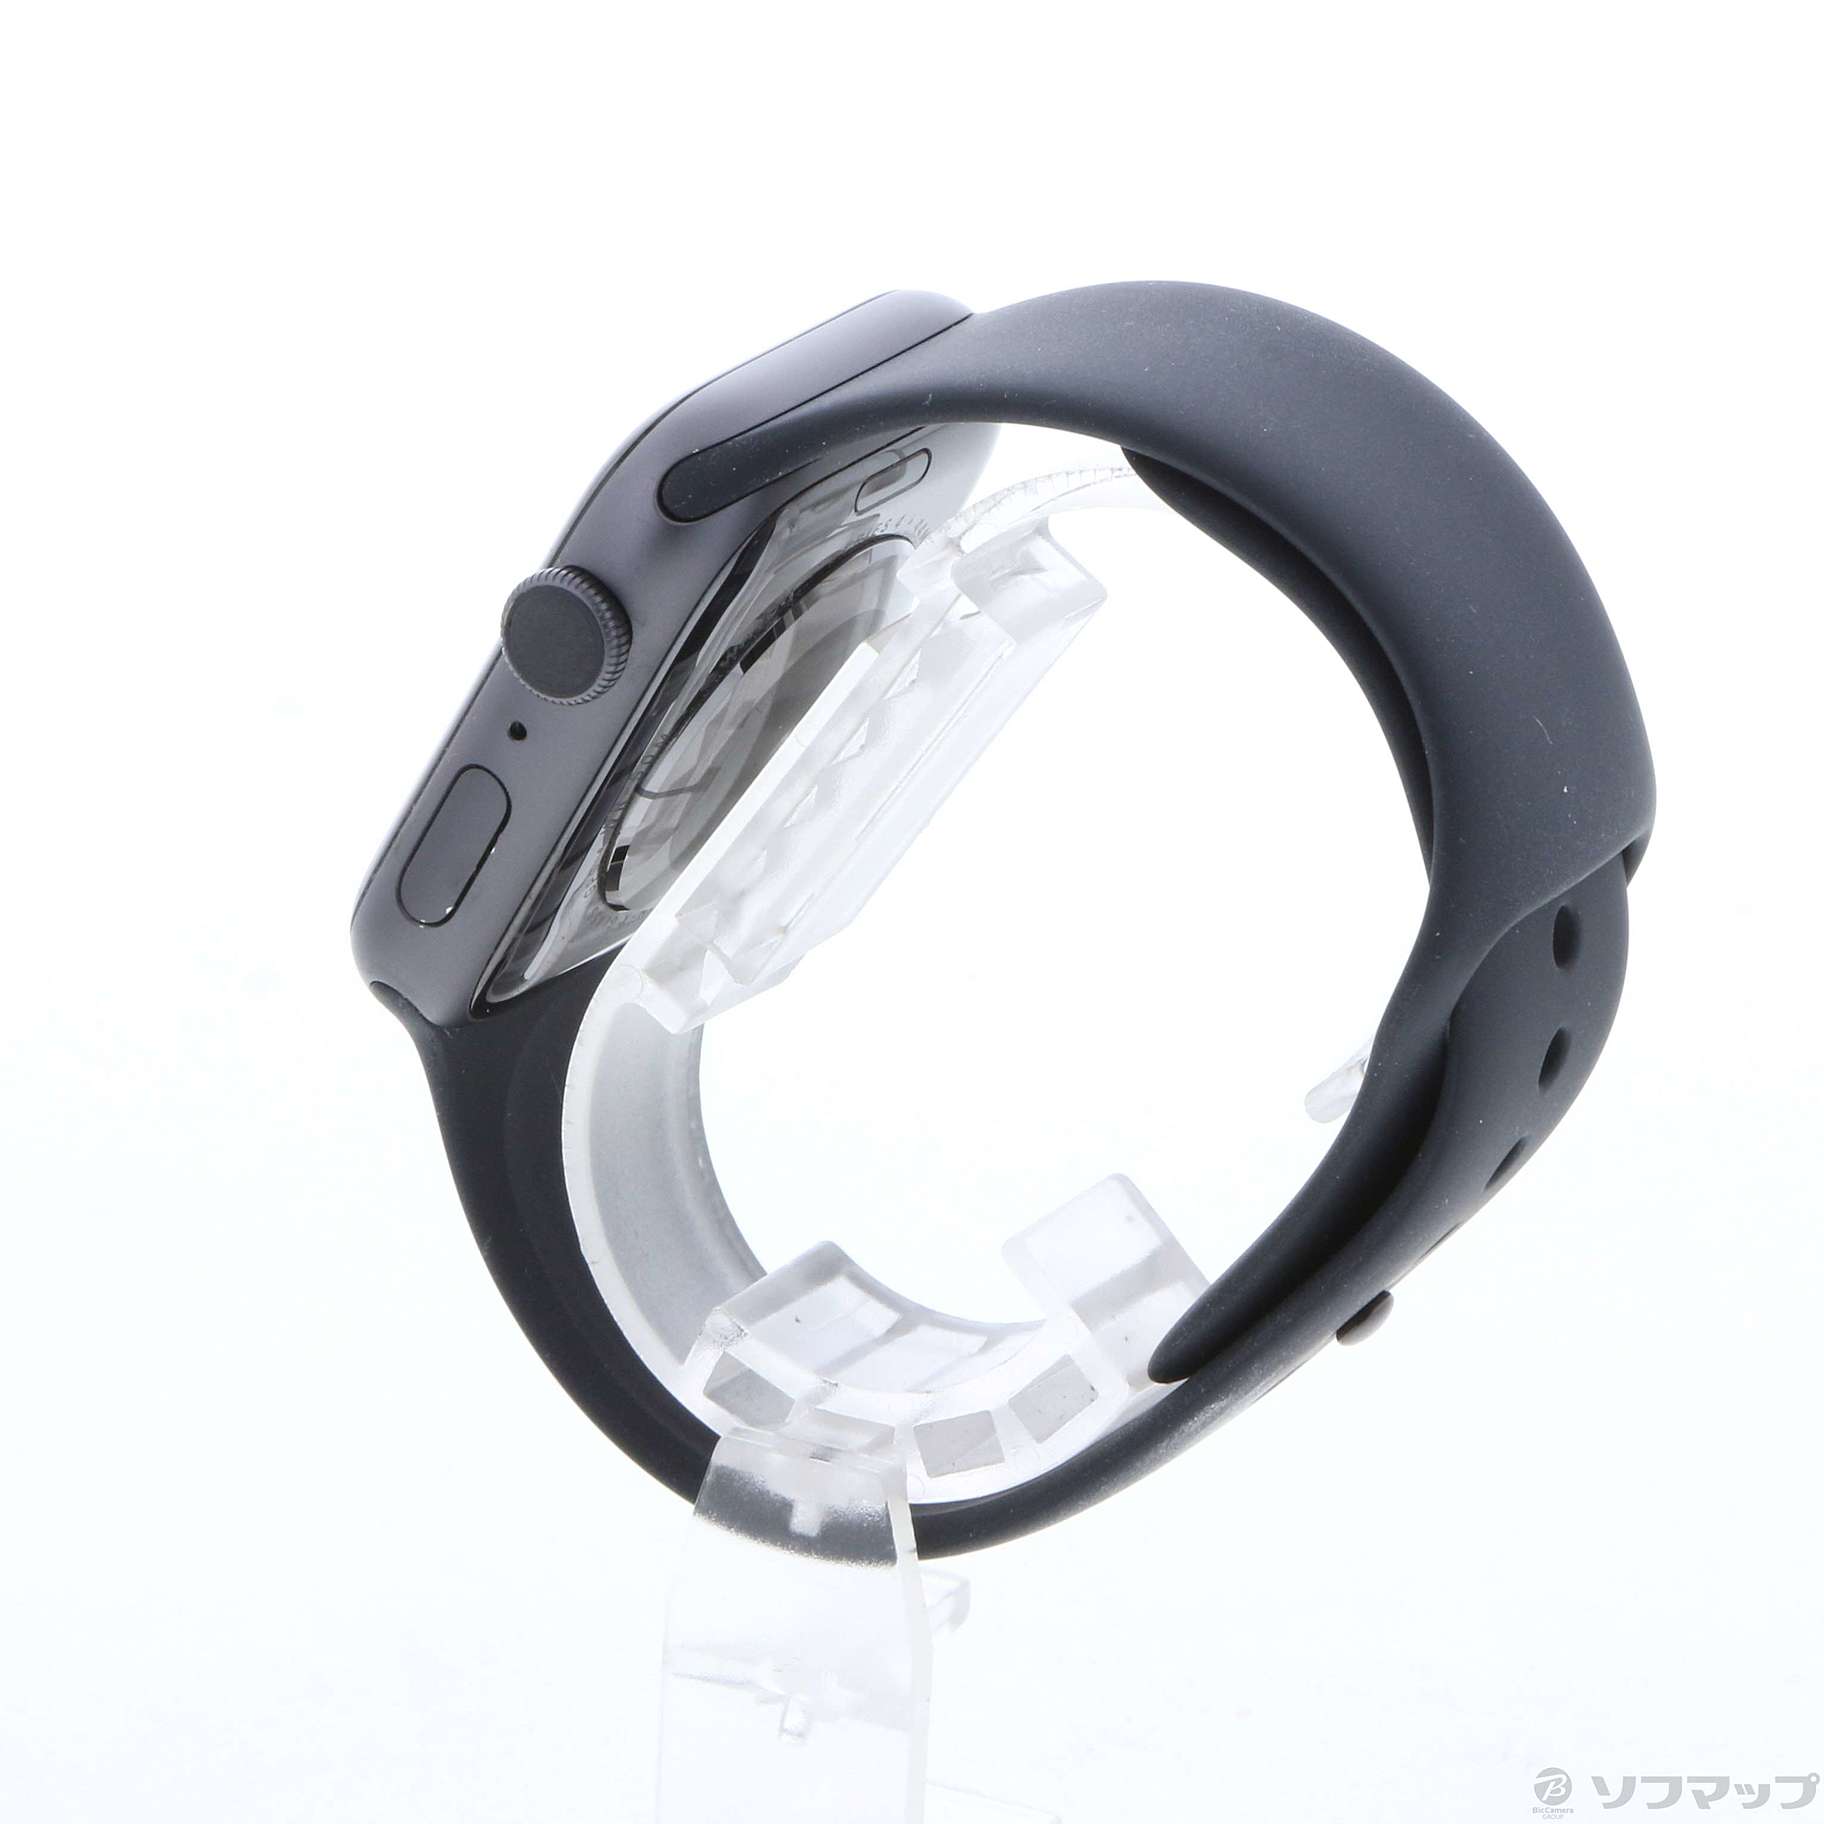 Apple Watch Series 4 GPS 44mm スペースグレイアルミニウムケース ブラックスポーツバンド